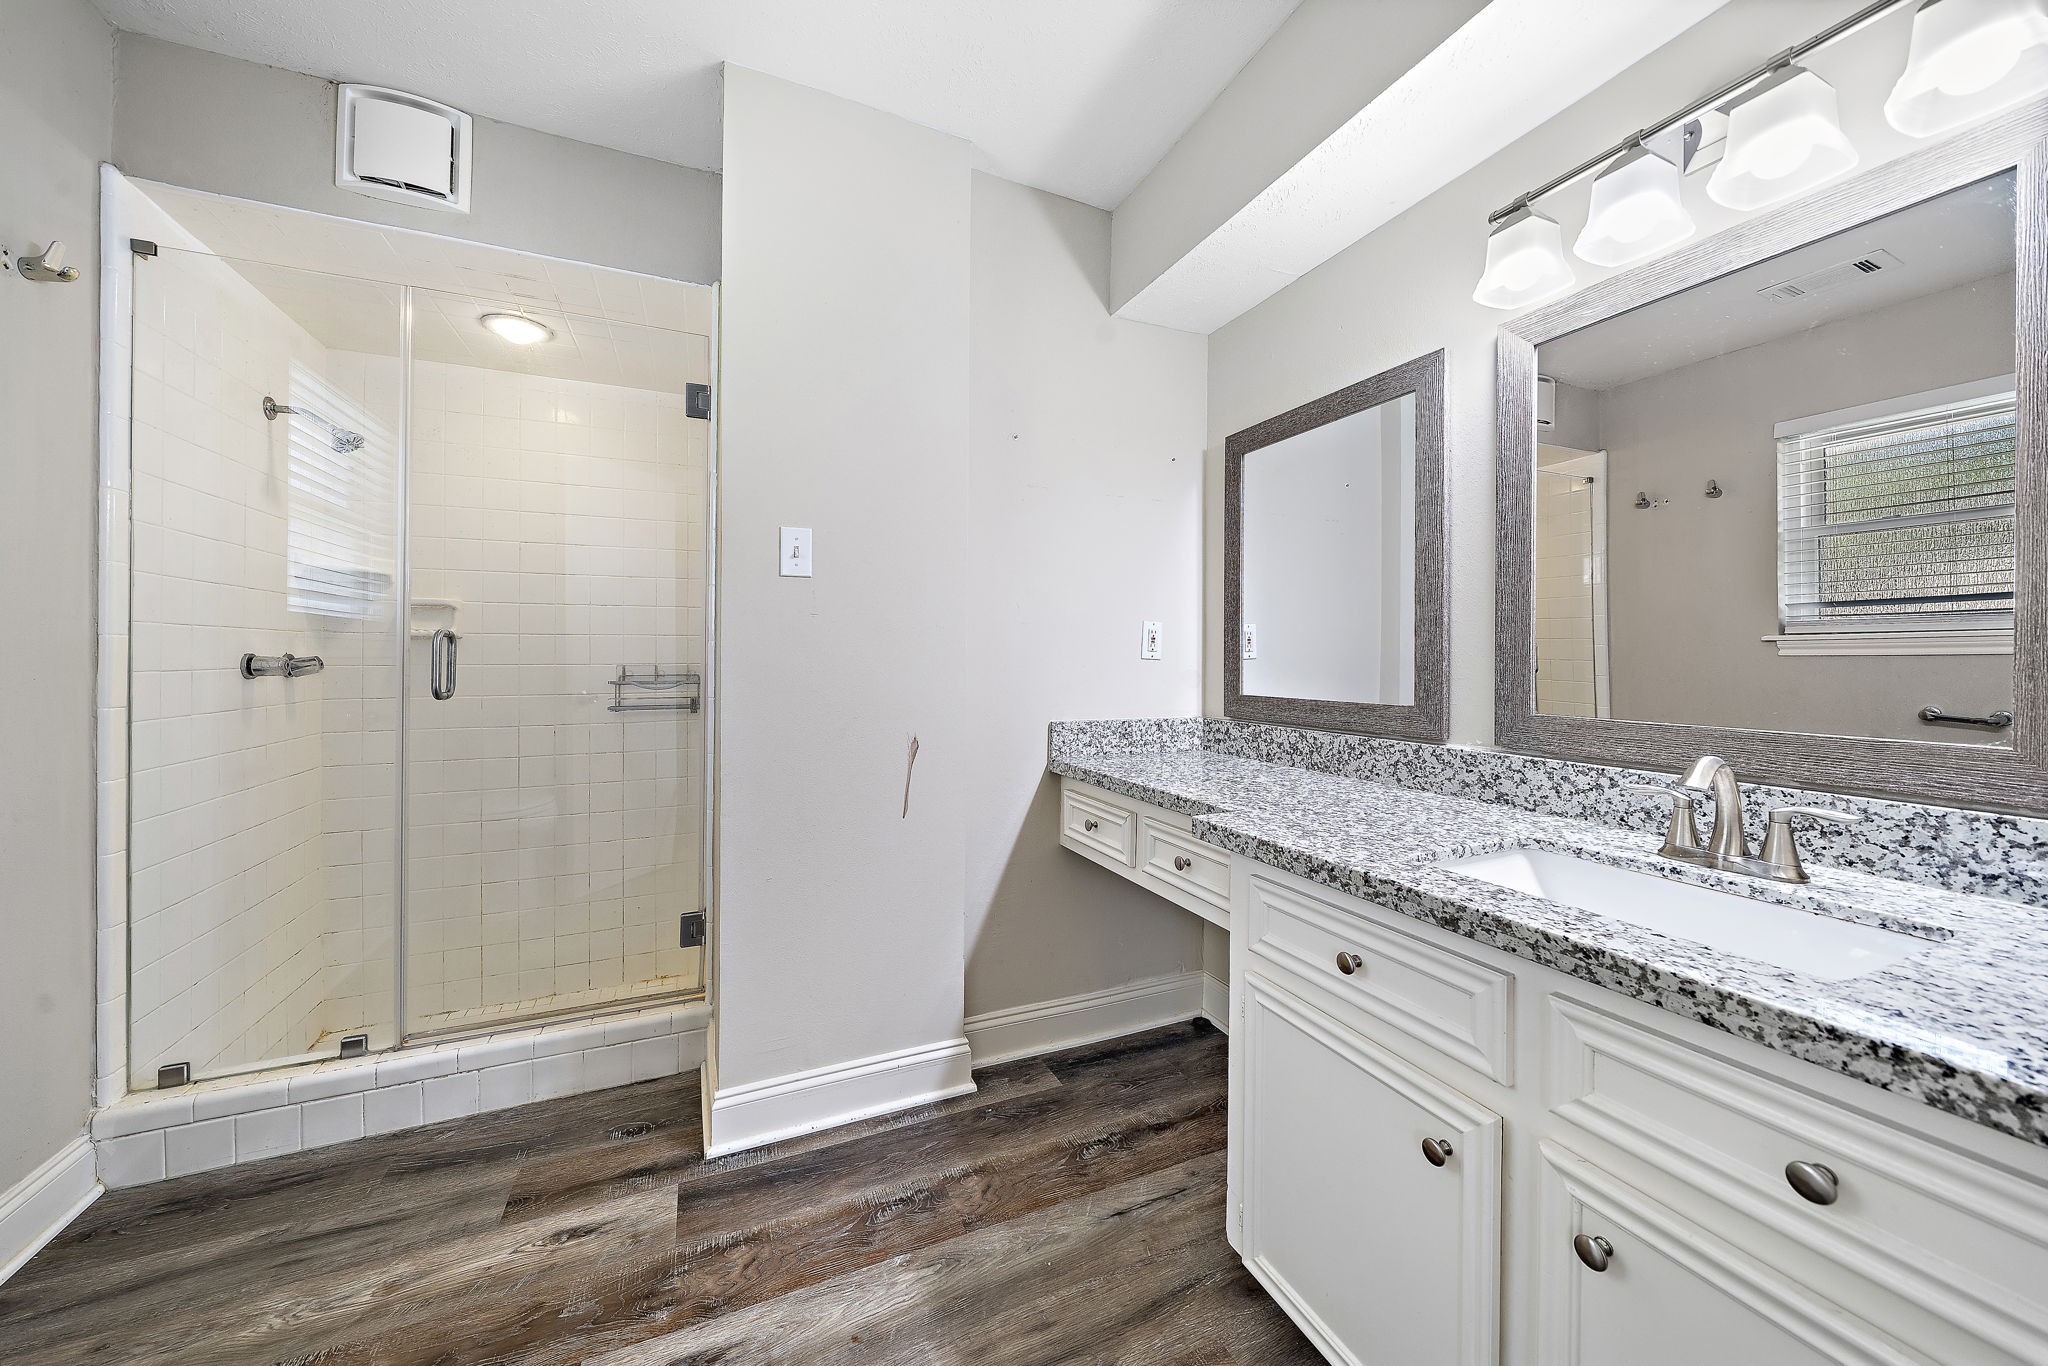 Updated primary bathroom with vanity area and beautiful granite countertops